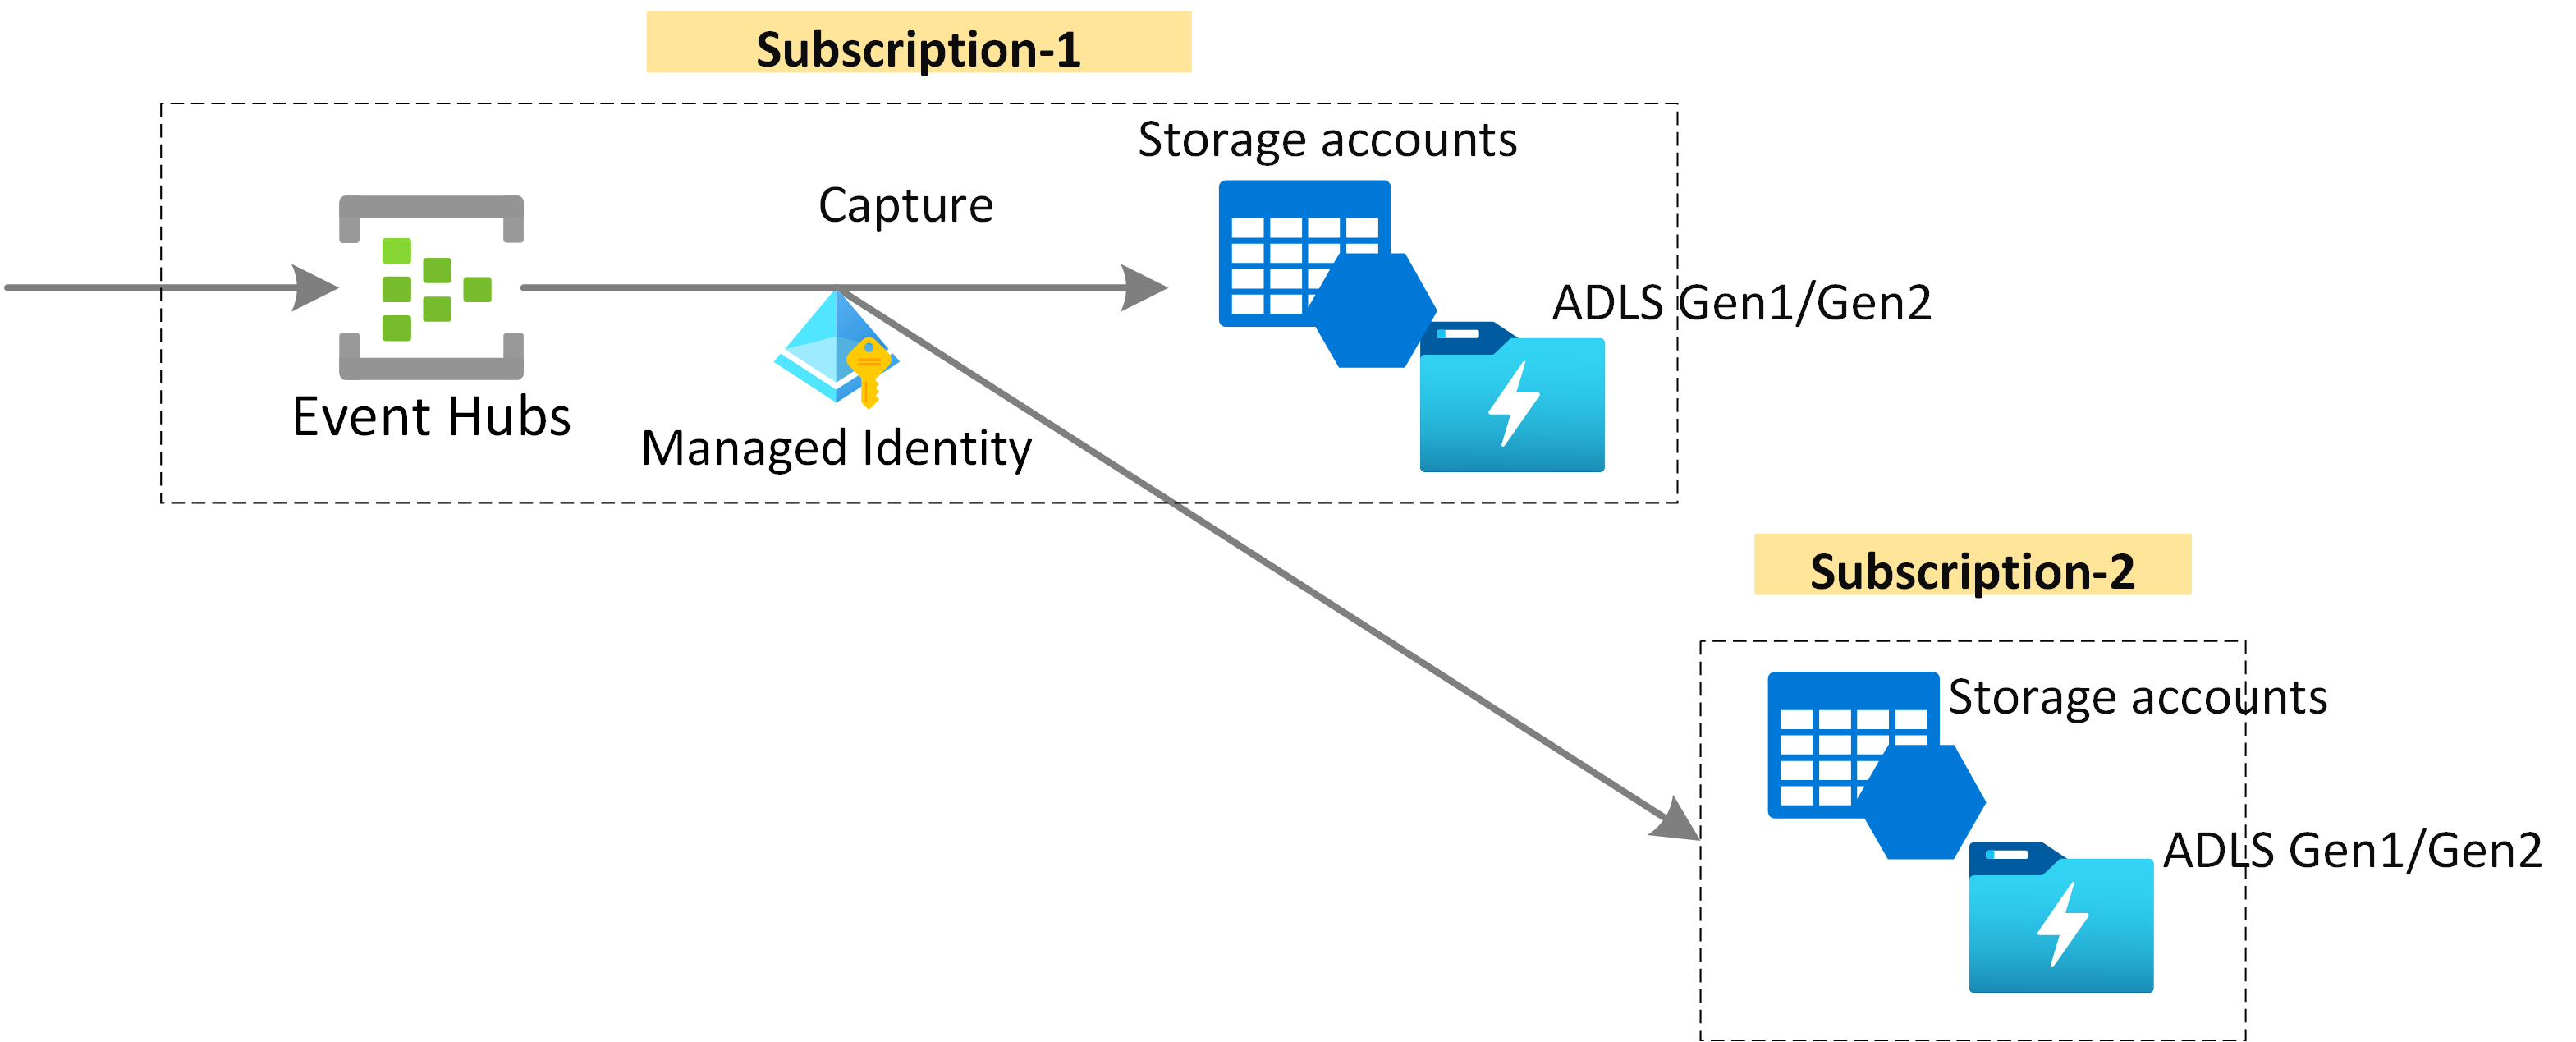 Diagrama que mostra a captura de dados de Hubs de Eventos no Armazenamento do Azure ou no Armazenamento do Azure Data Lake usando a Identidade Gerenciada.